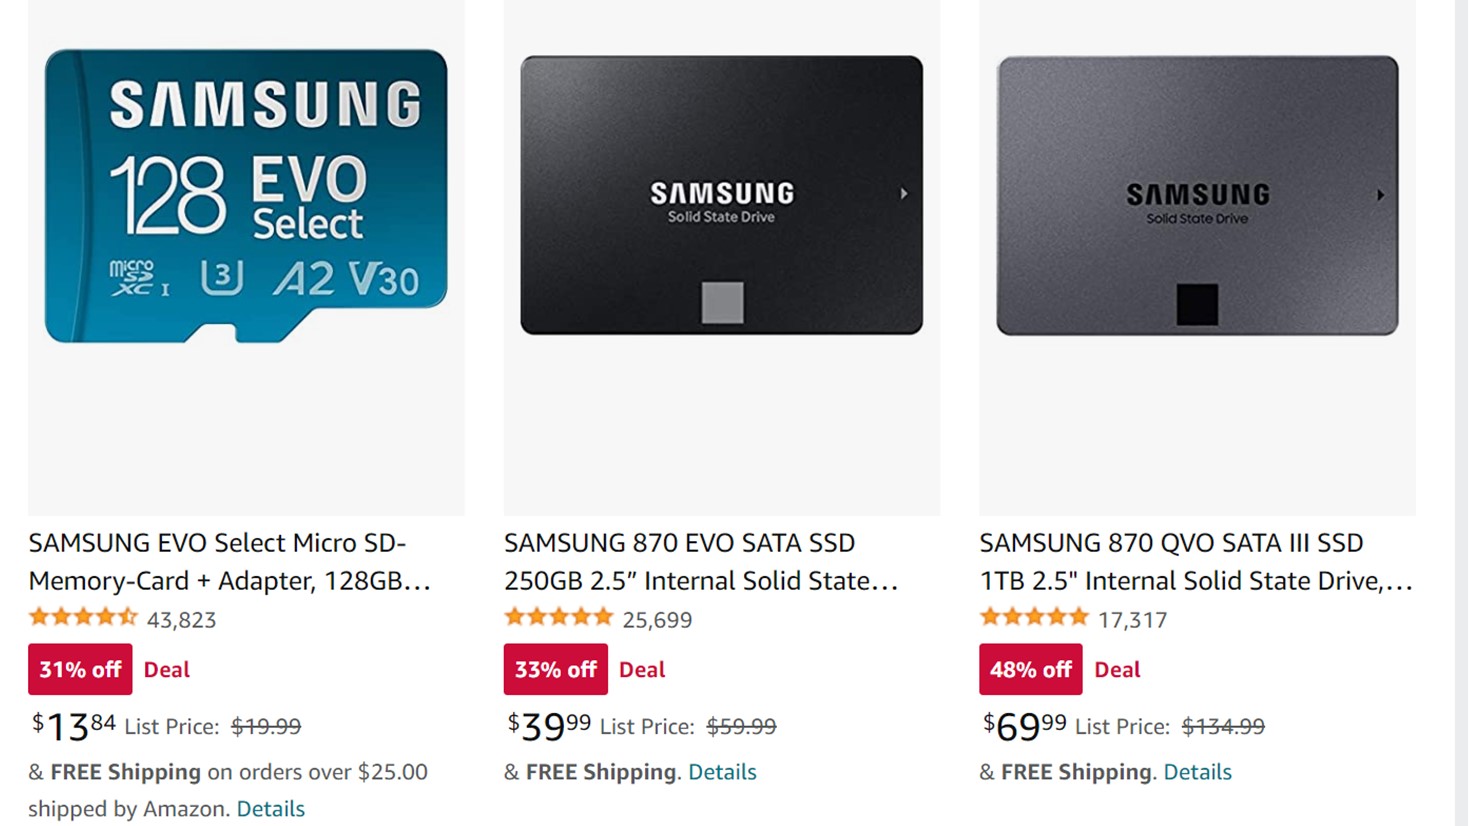 Samsung Storage Devices Sale Amazon